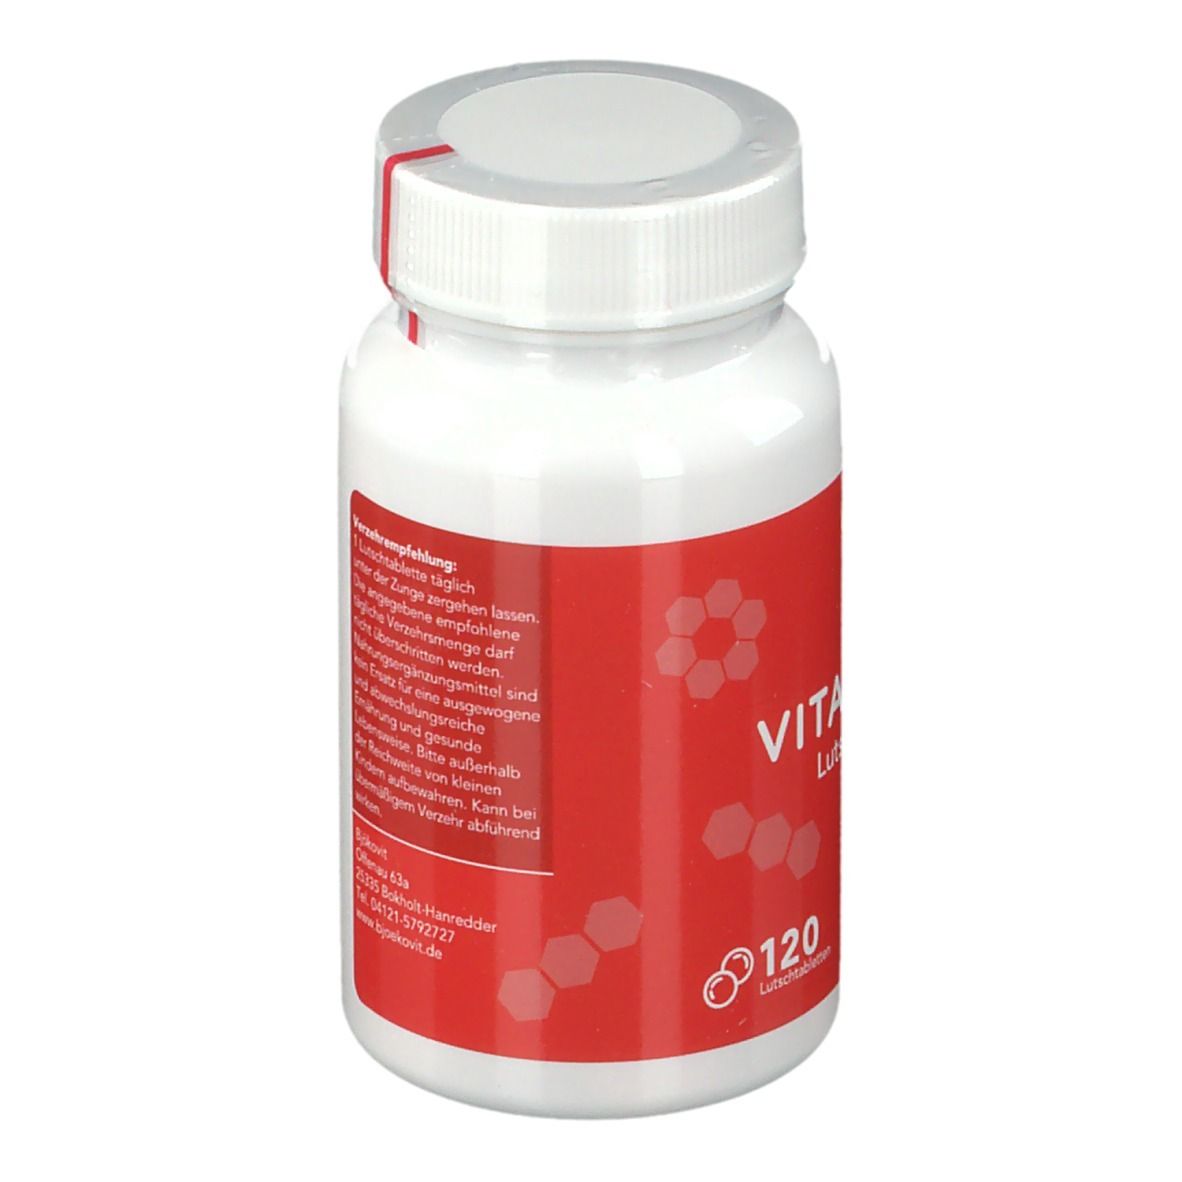 BjökoVit Vitamin B12 Lutschtabletten 1000 µg